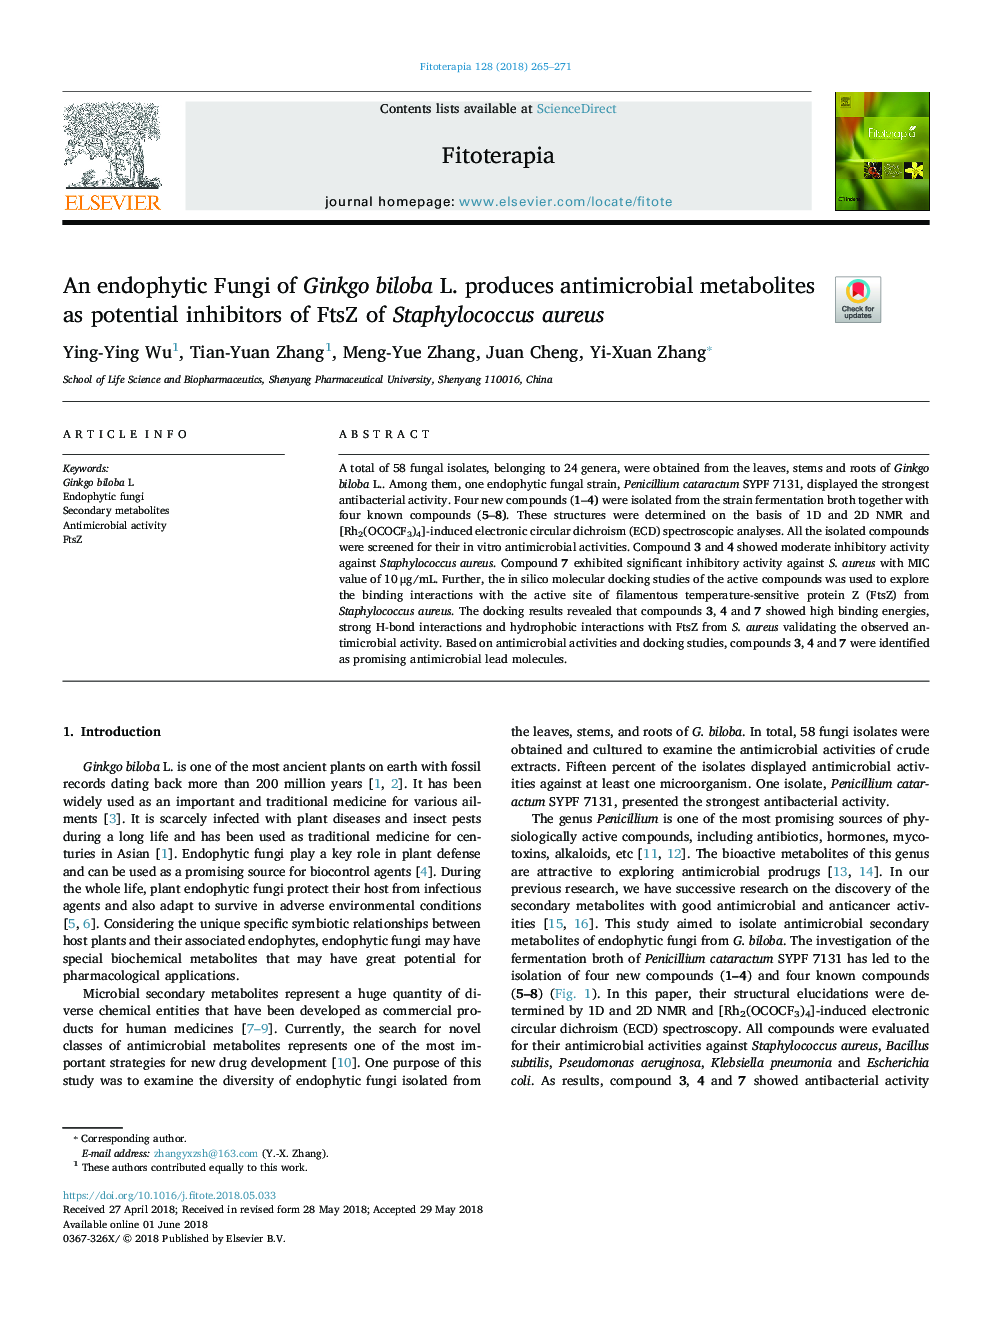 An endophytic Fungi of Ginkgo biloba L. produces antimicrobial metabolites as potential inhibitors of FtsZ of Staphylococcus aureus